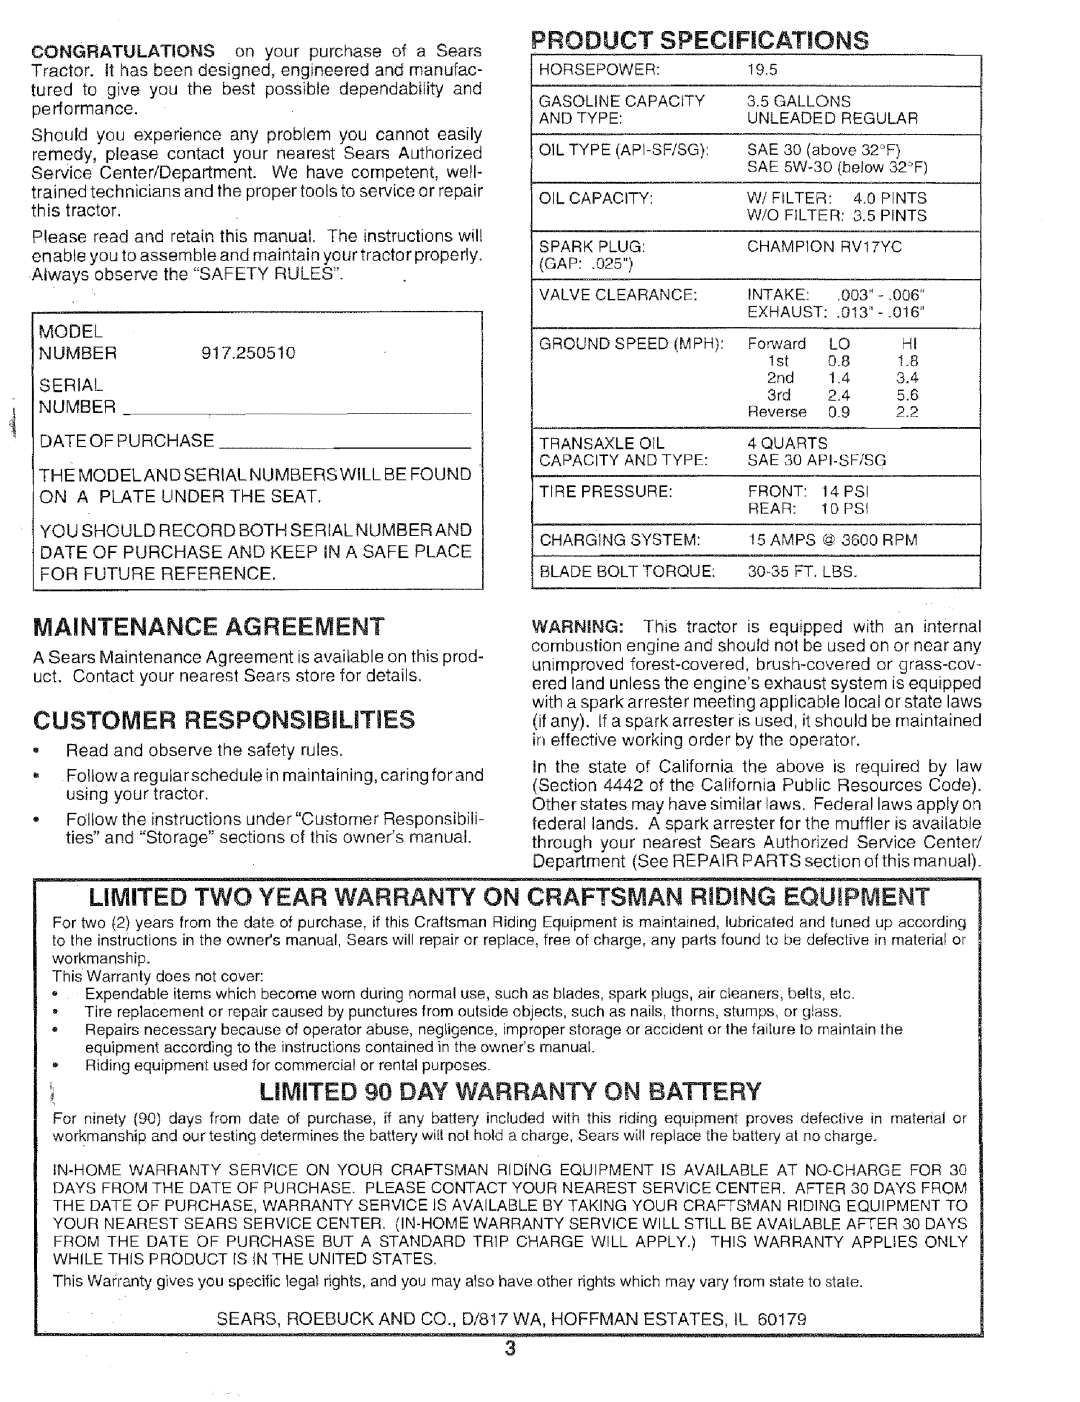 Sears 917.25051 manual Maintenance Agreement, Customer Responsibimties, Product Specifications 